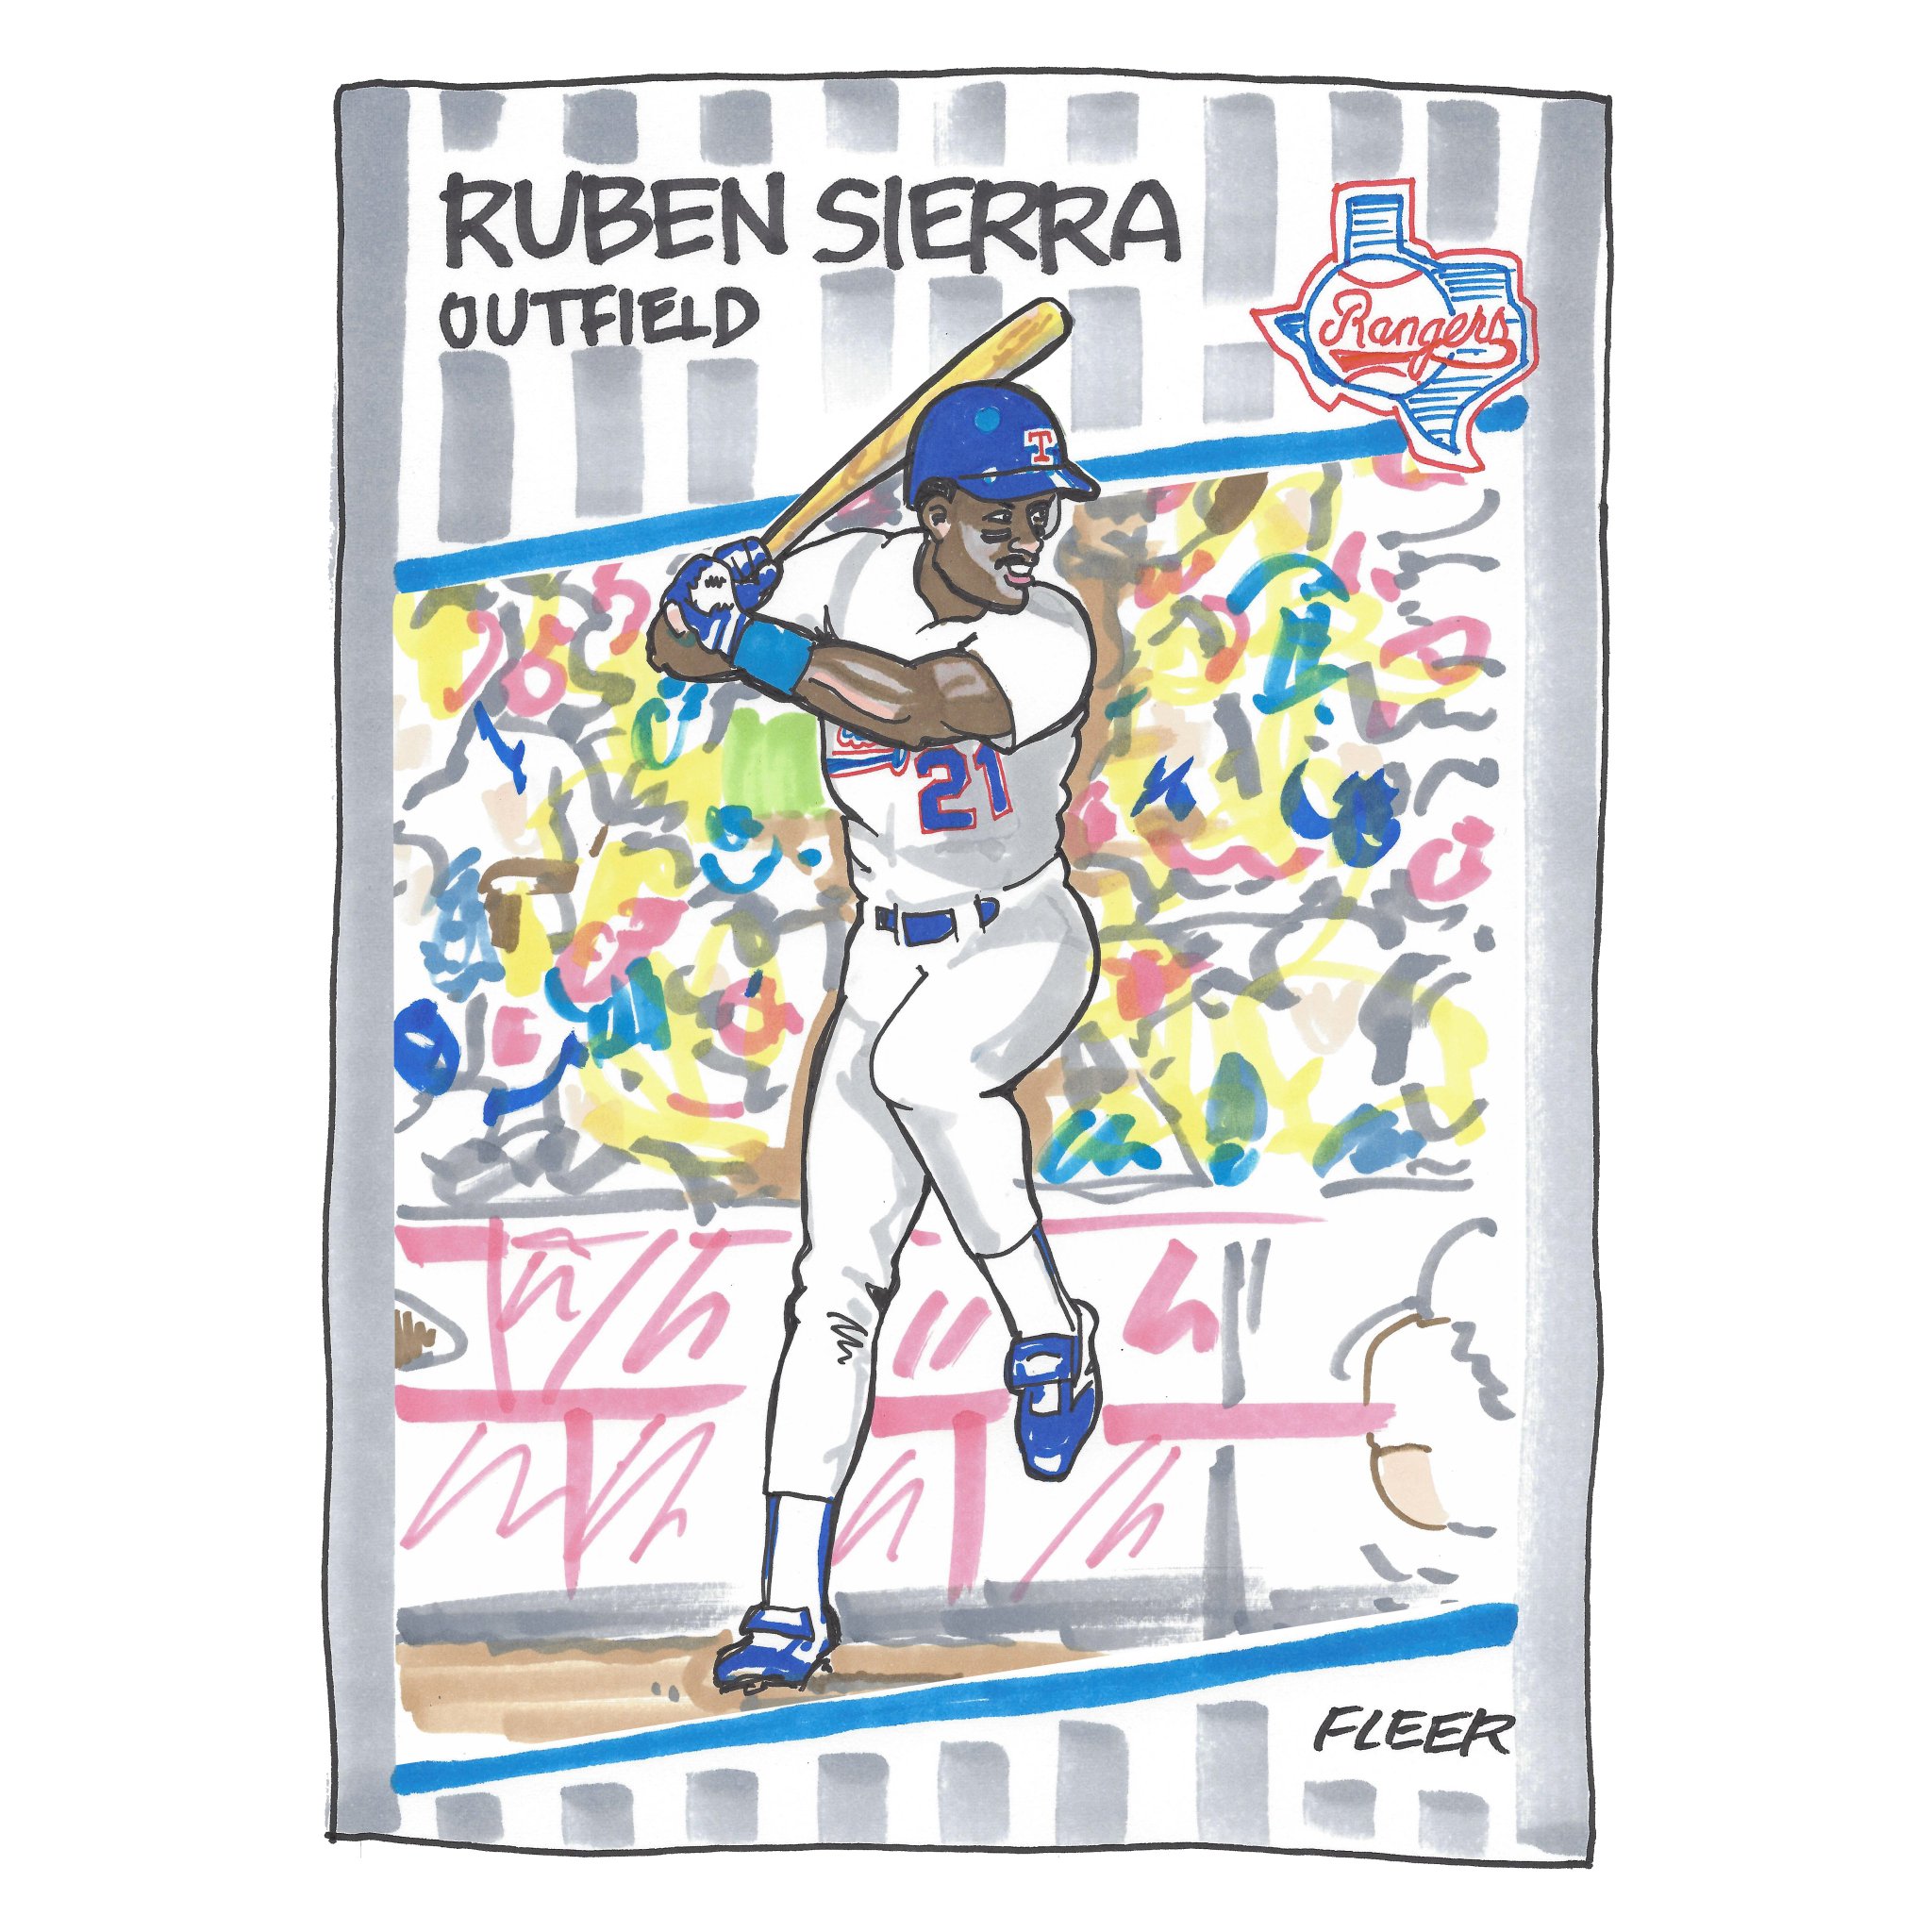 Happy Birthday Ruben Sierra.
20 year career - 2152 hits, 306 HR, 1322 RBI.  Not bad  